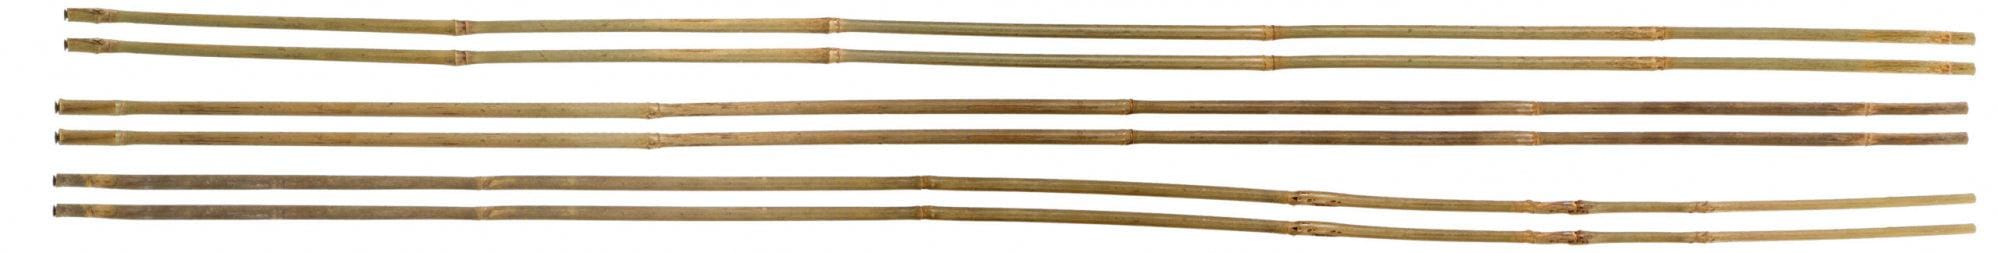 25 Tutori canne in bambu reggipiante h 210 cm -  diam 22-24 mm - Stocker Stocker (2491617)